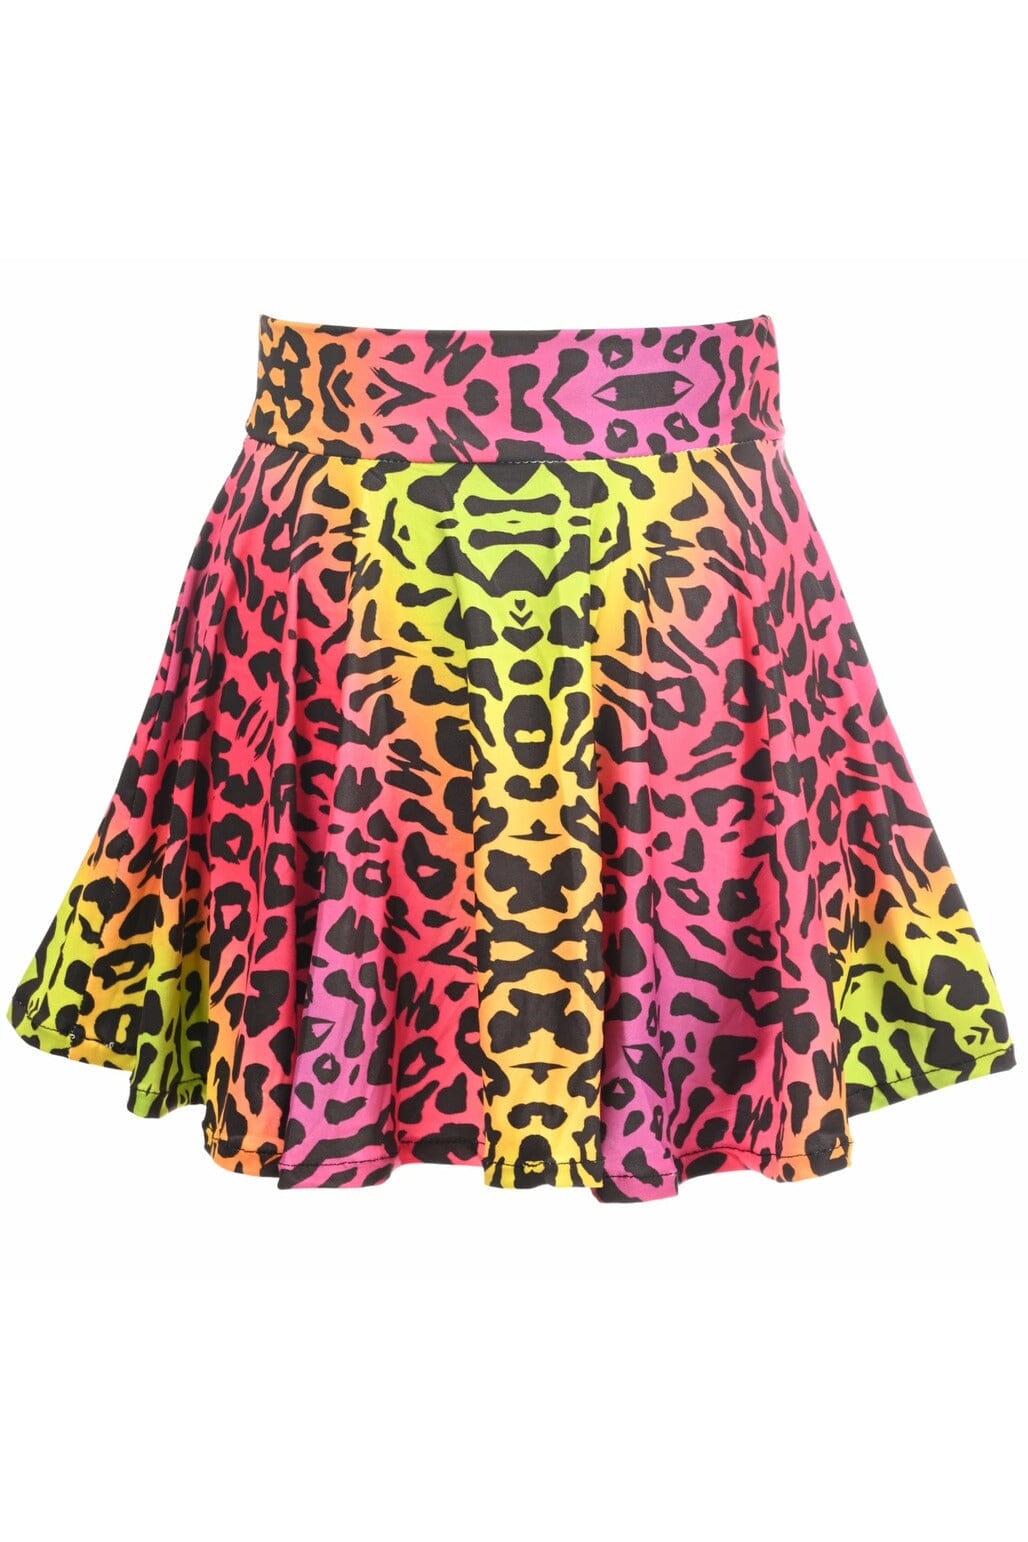 Rainbow Leopard Print Stretch Lycra Skirt-Costume Skirts-Daisy Corsets-Rainbow-XS-SEXYSHOES.COM